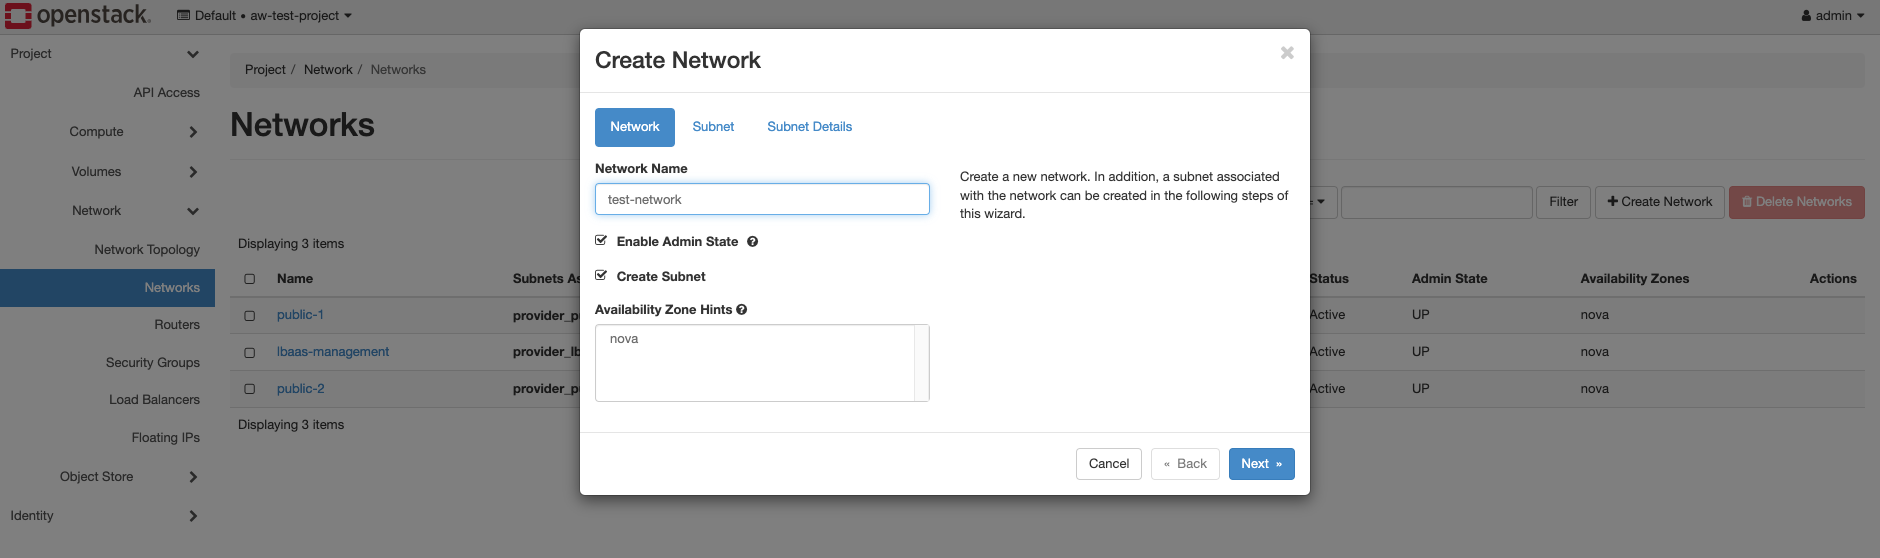 Openstack New Network